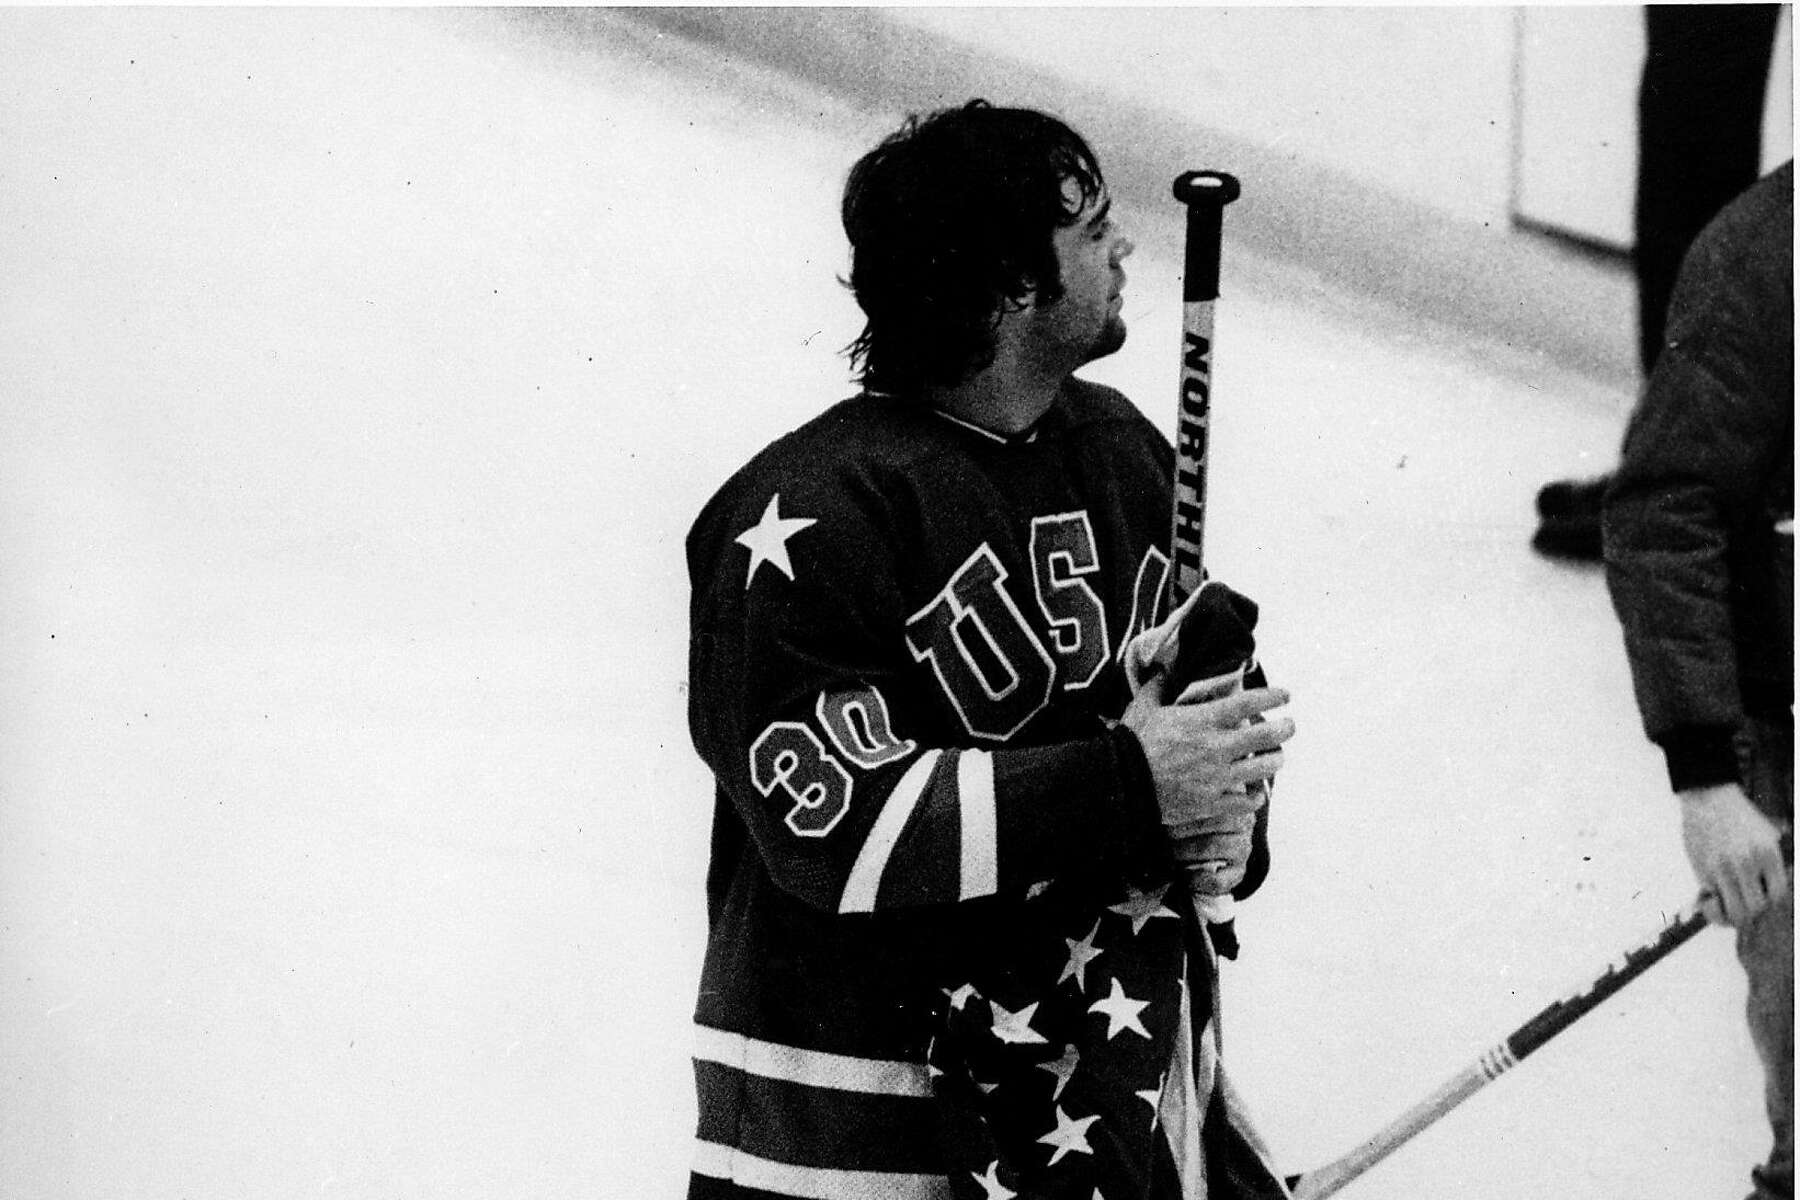 Miracle on Ice' goalie Jim Craig selling memorabilia - The Boston